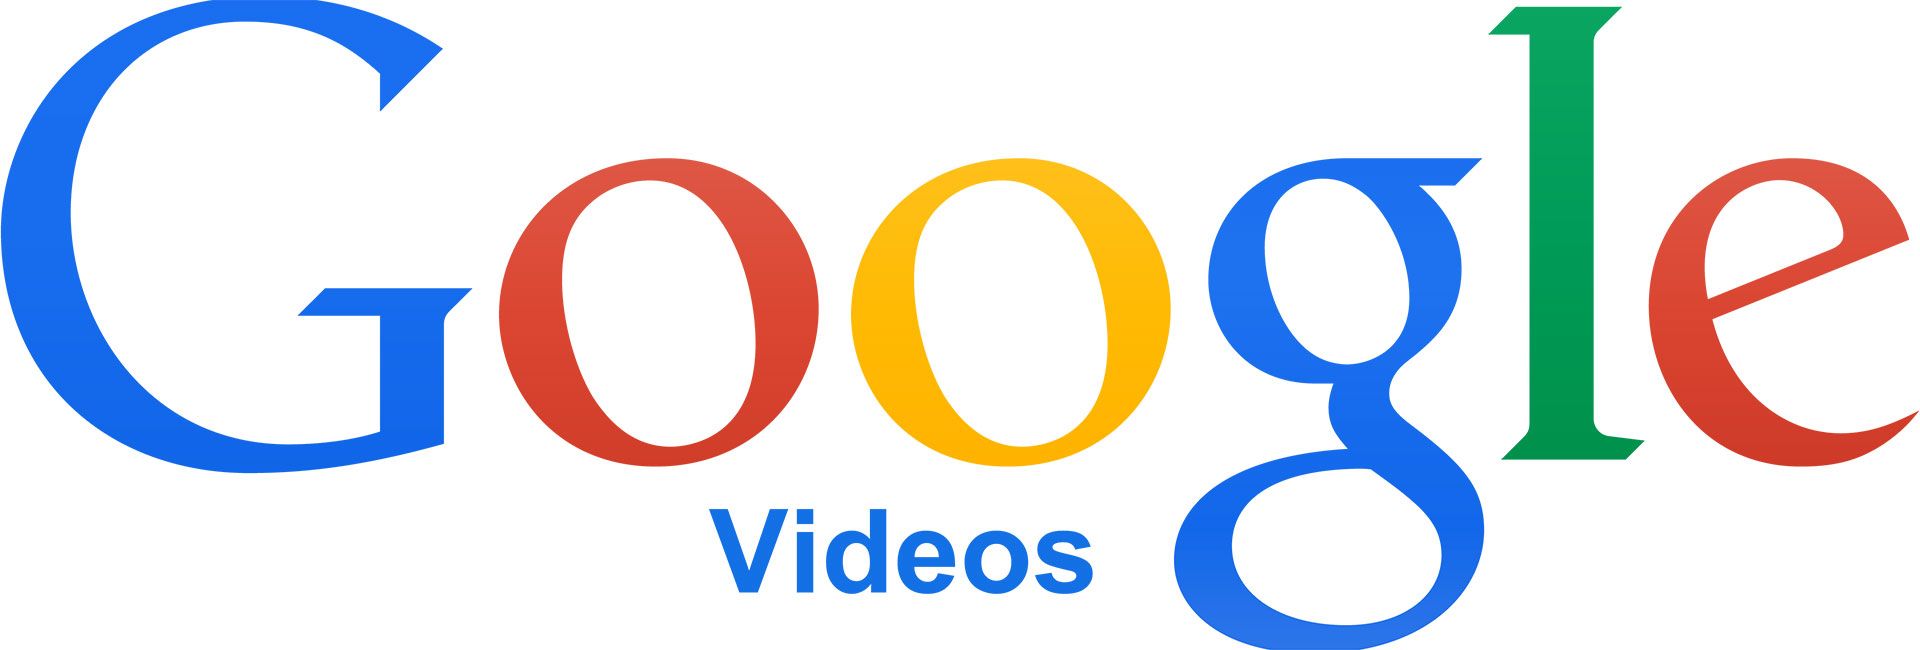 لوگوی قدیمی Google Video